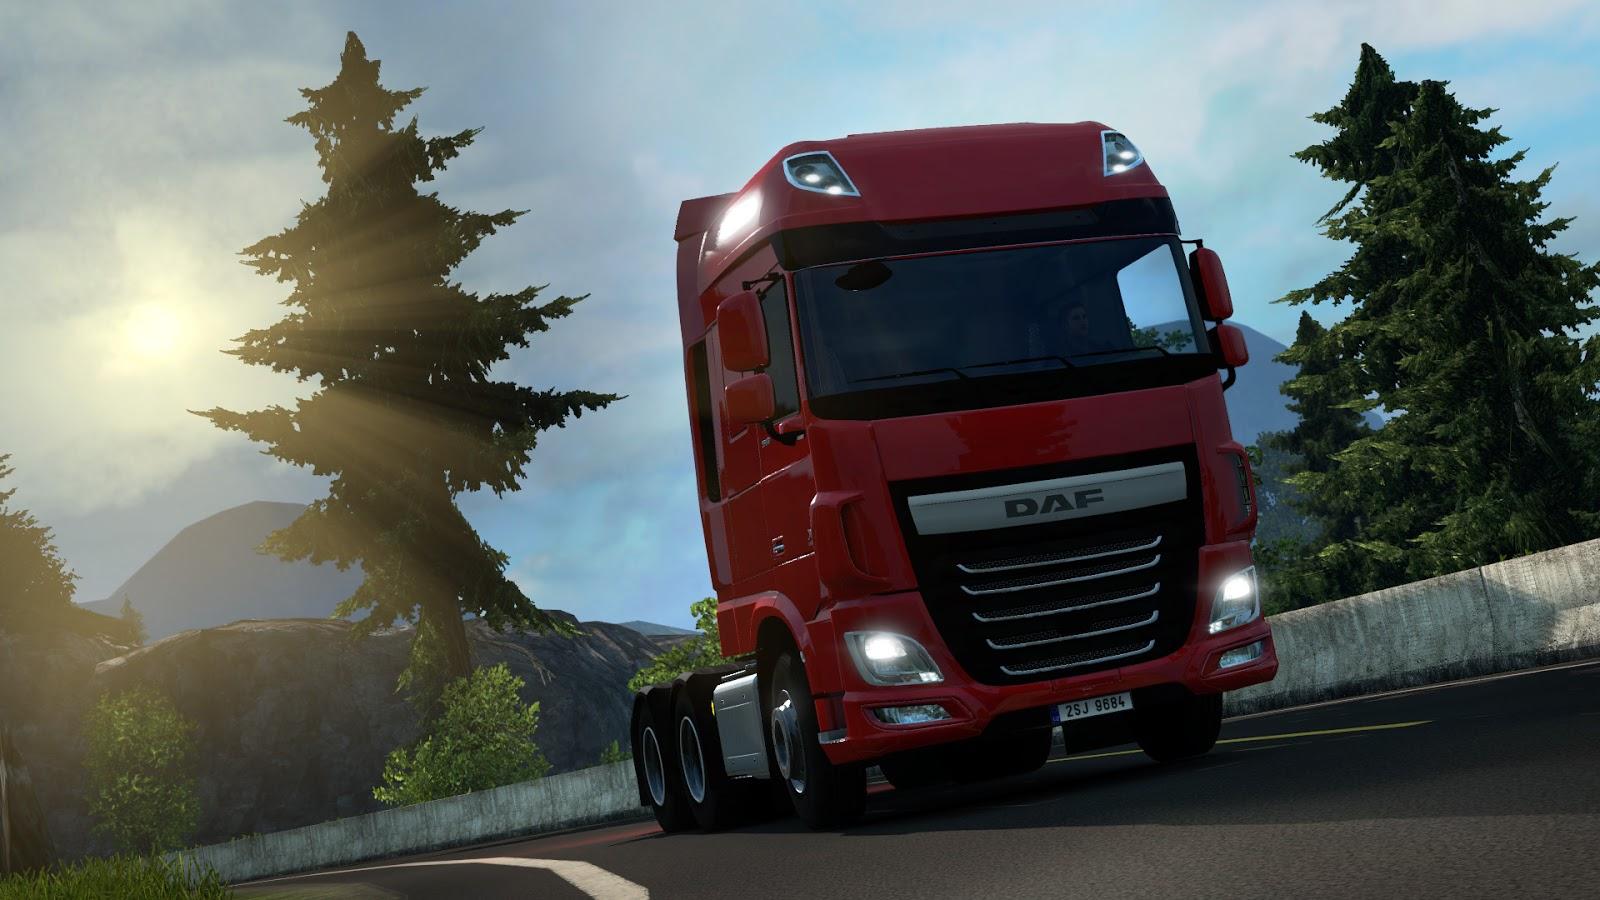 ALL TRUCK 750HP MOD (SP MP) V1.1 ETS 2 2 Mods. Euro Truck Simulator 2 Mods